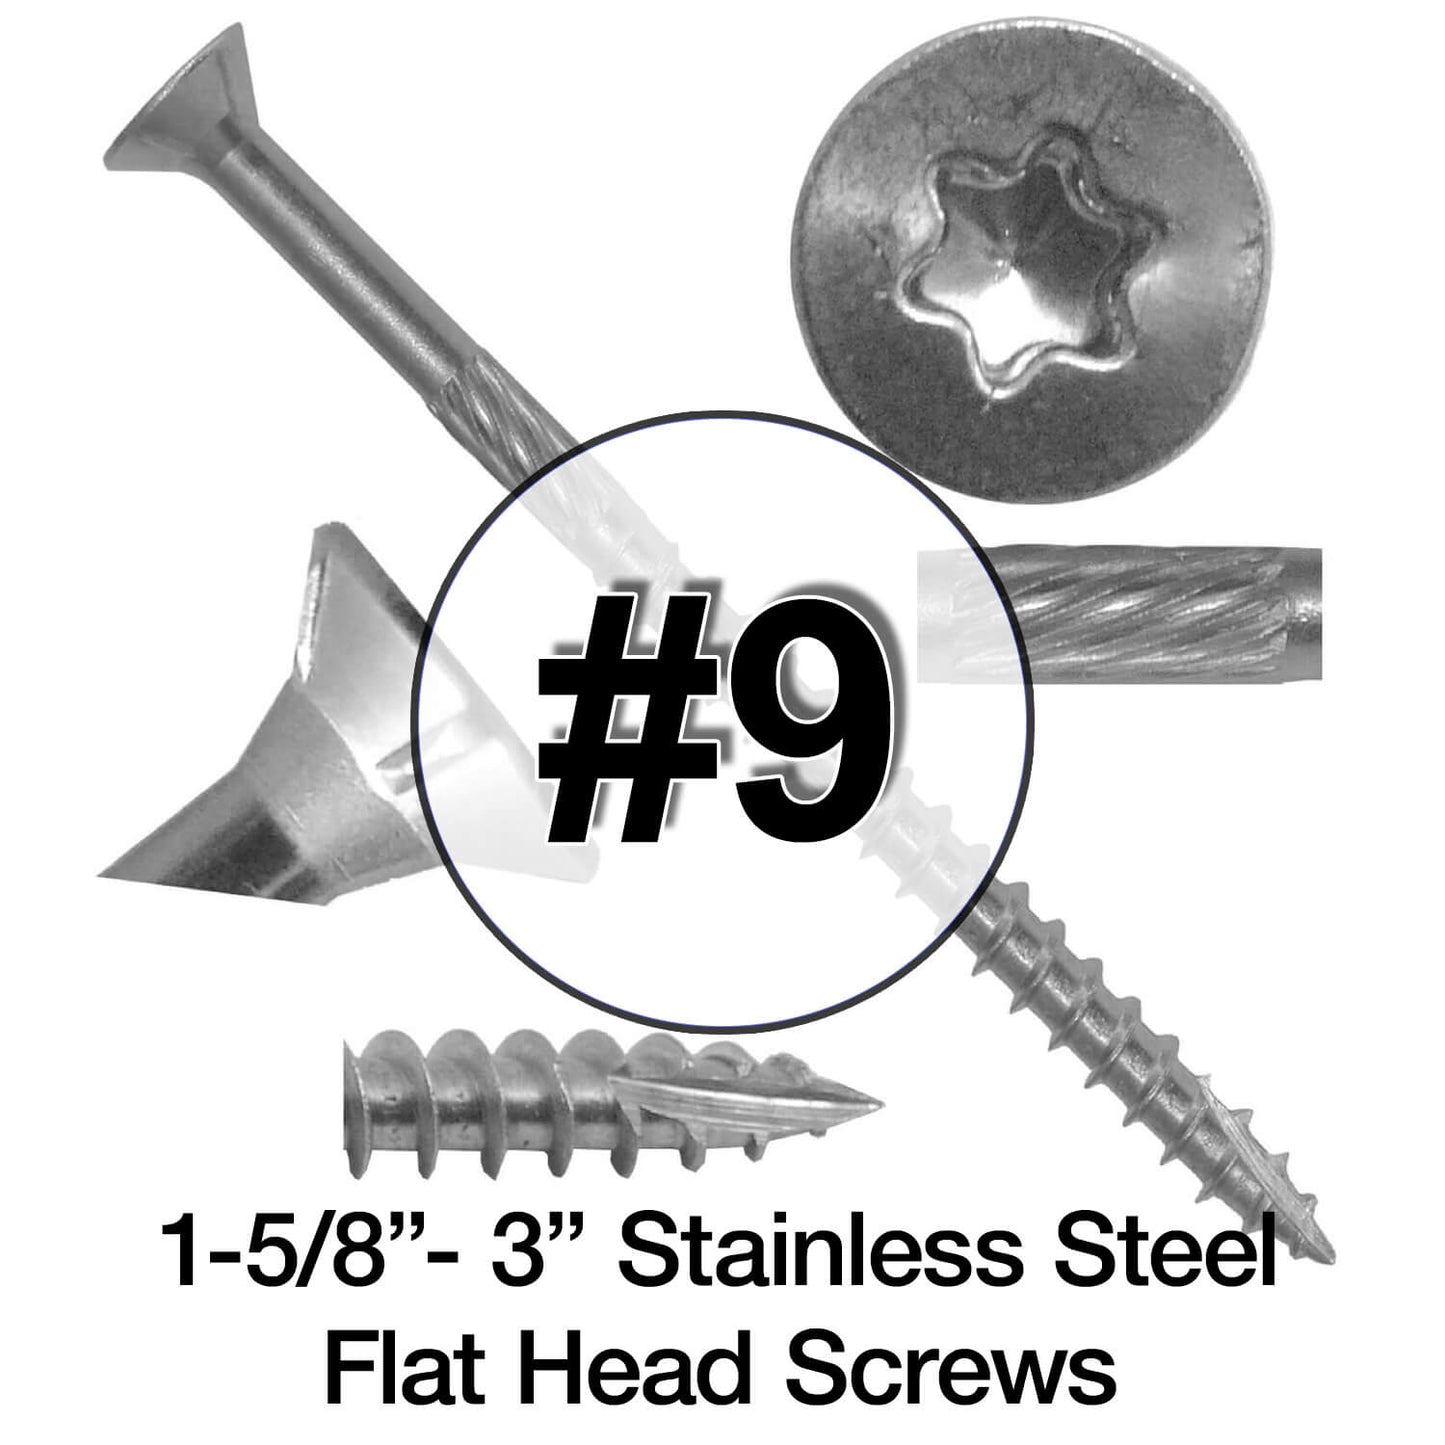 #9 Silver Star Stainless Steel Wood Screw Torx/Star Drive Head - Grade 300 Series Stainless Steel Torx/Star Drive Wood Screws